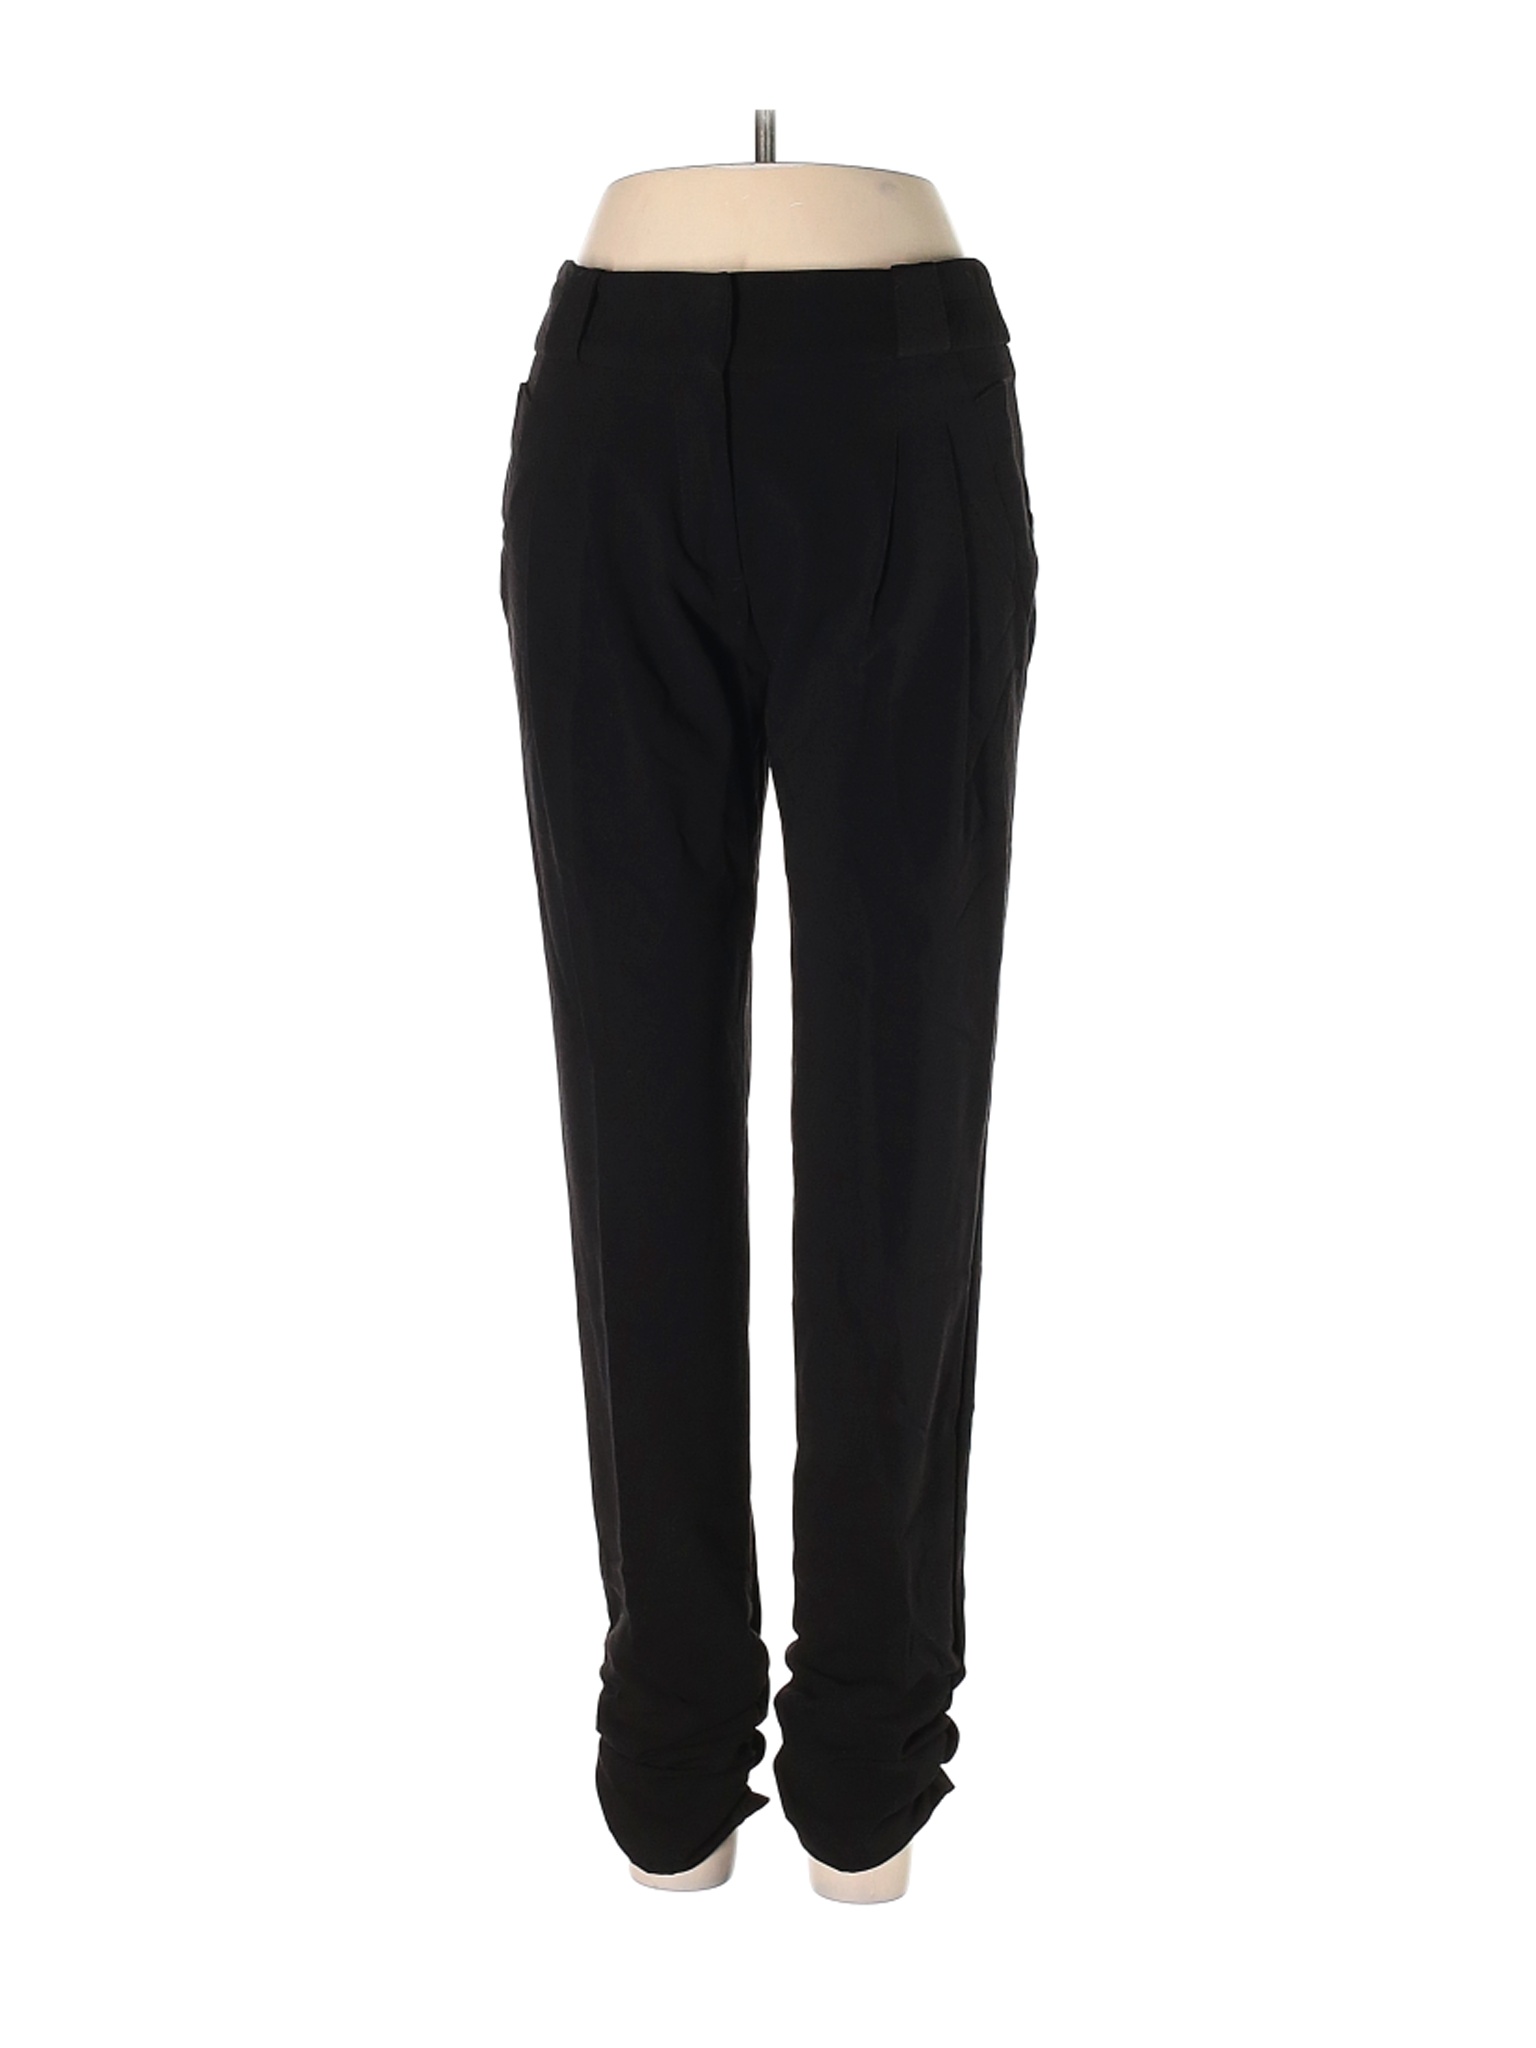 Orsay Women Black Casual Pants 34 eur | eBay